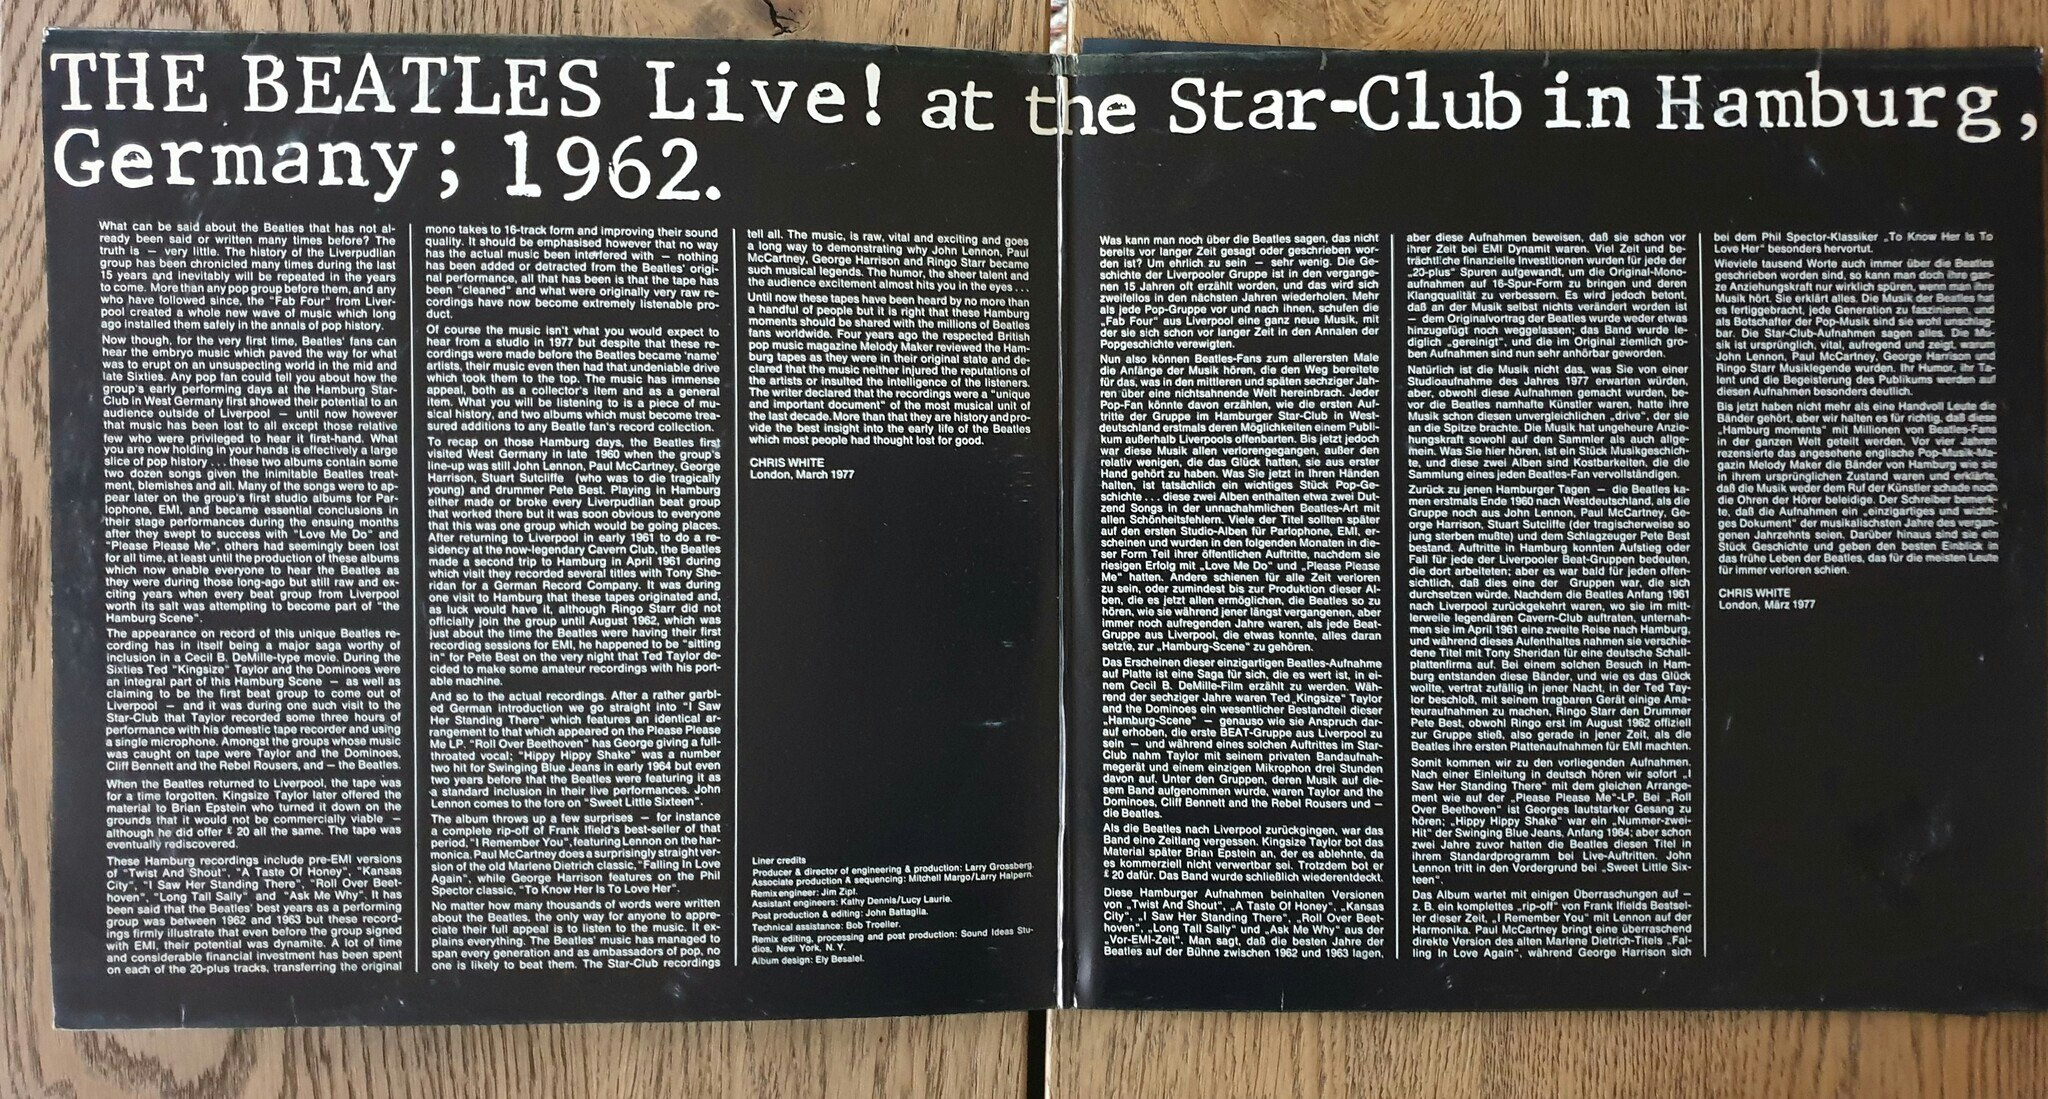 The Beatles, Live at the Star-Club. Vinyl 2LP